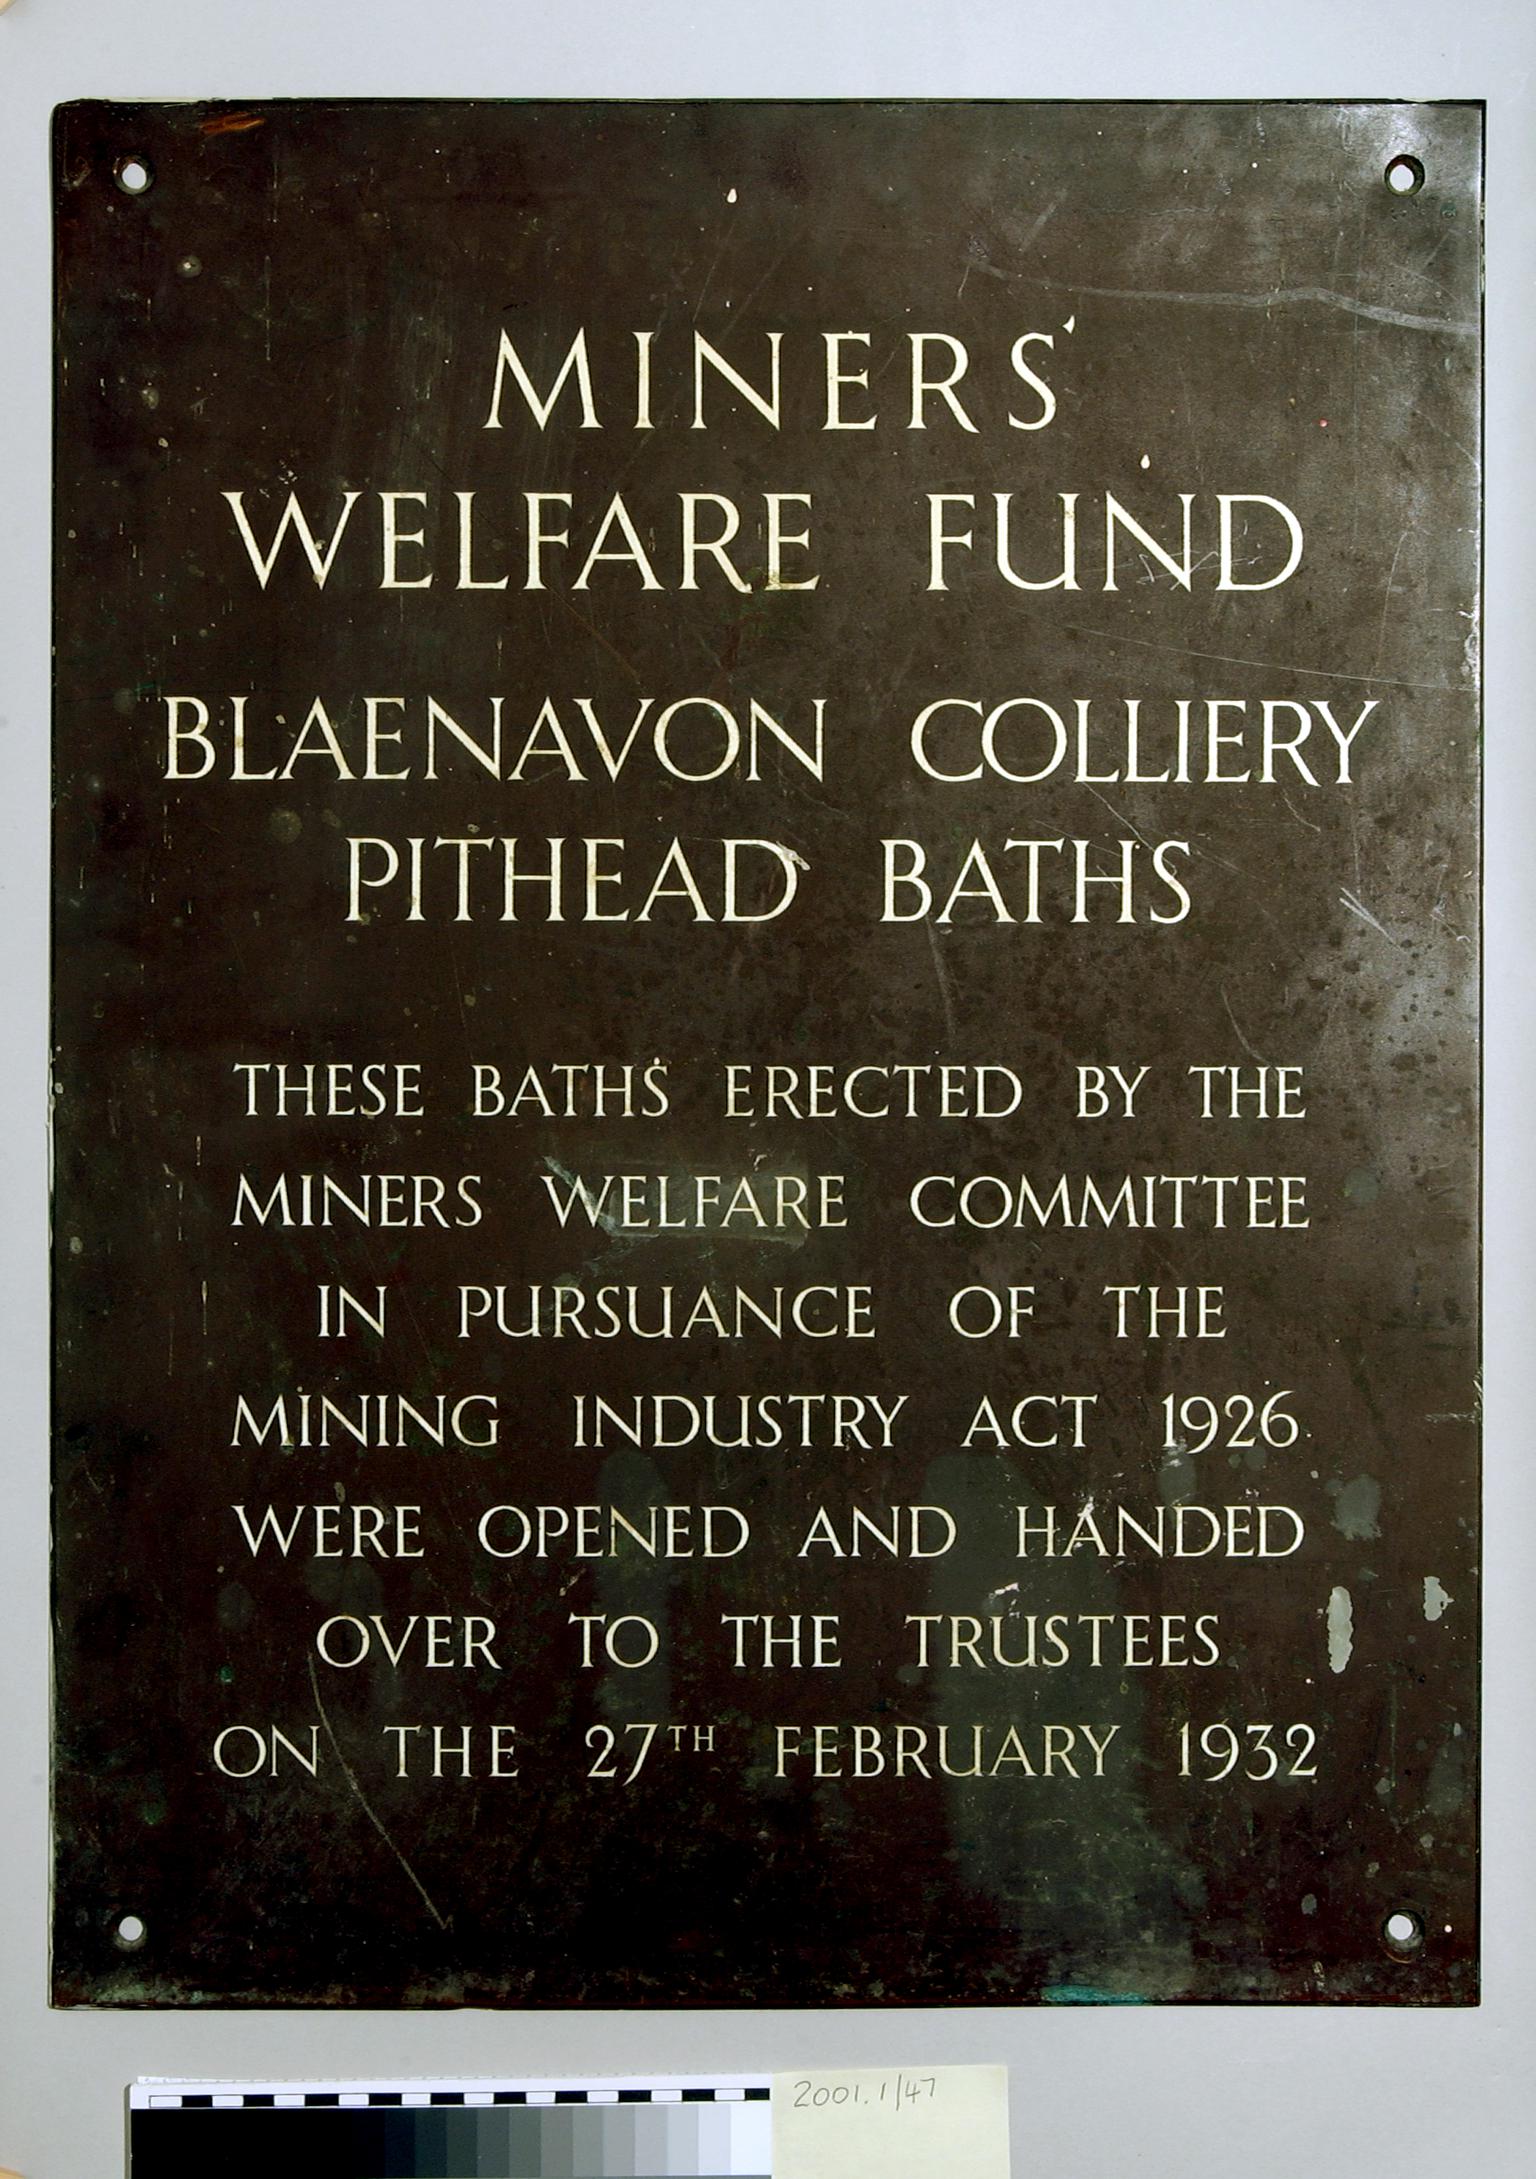 Pithead baths plaque